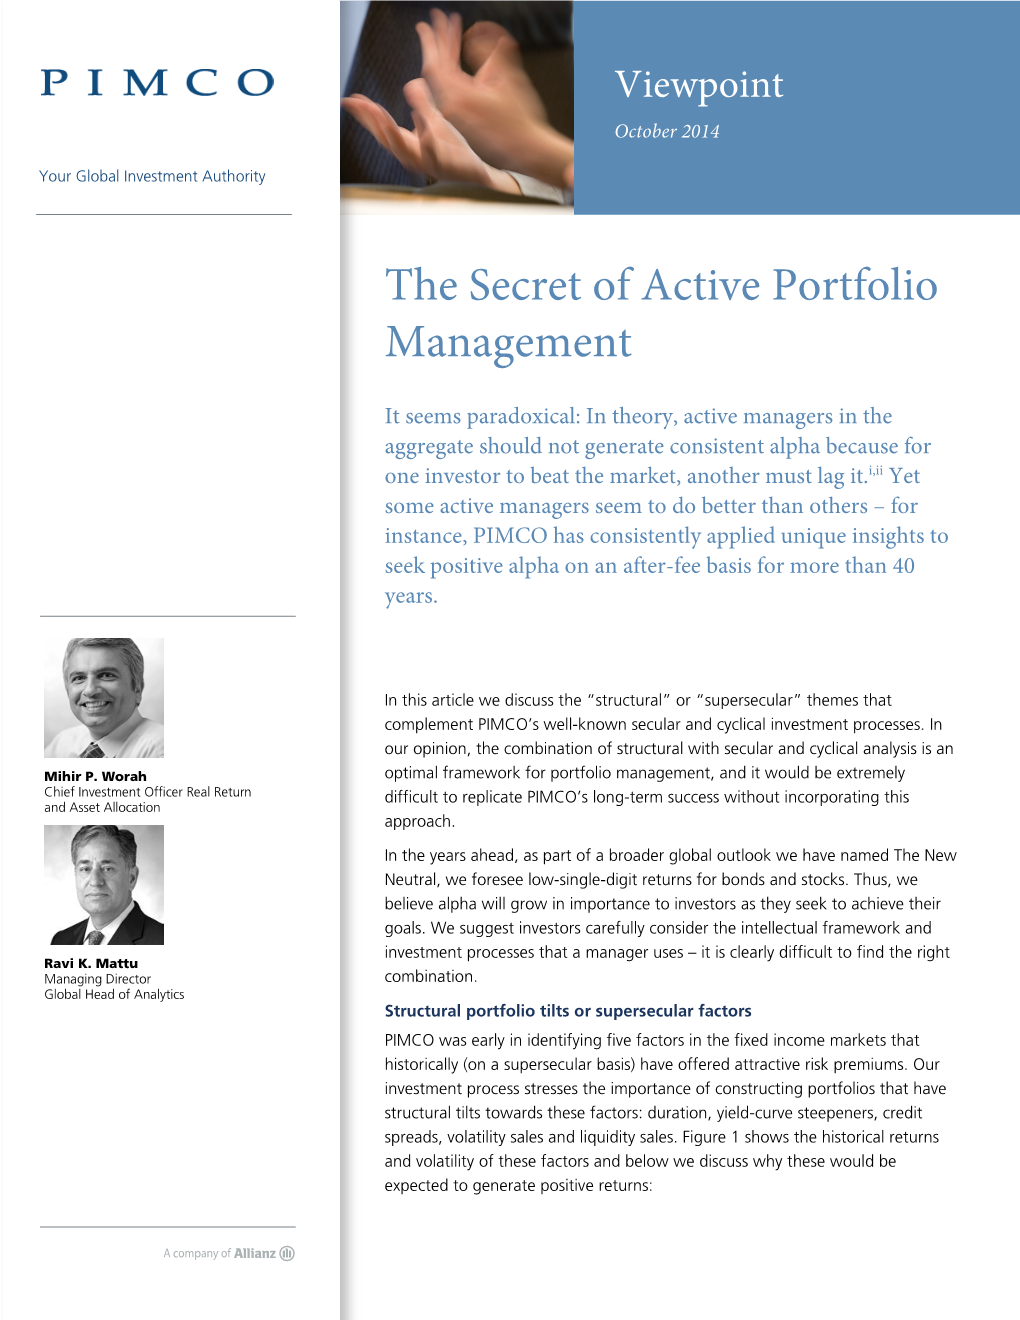 The Secret of Active Portfolio Management